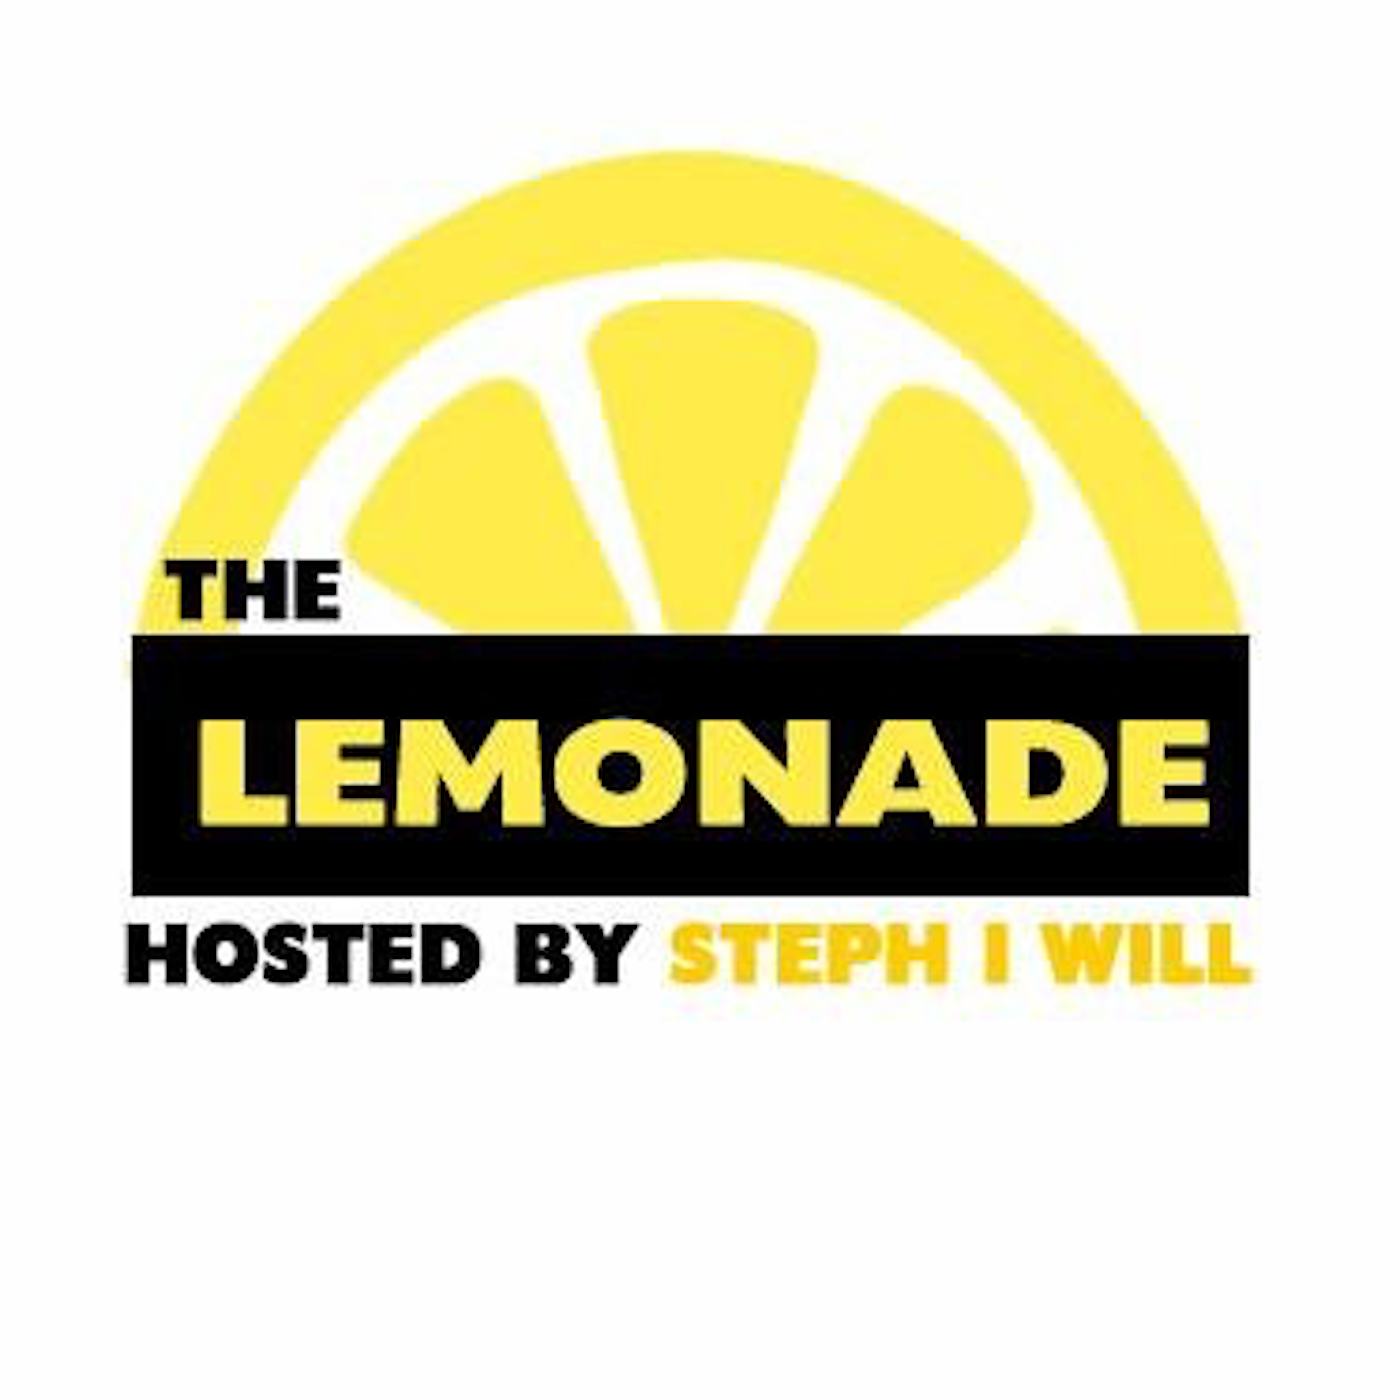 The Lemonade is Byke!